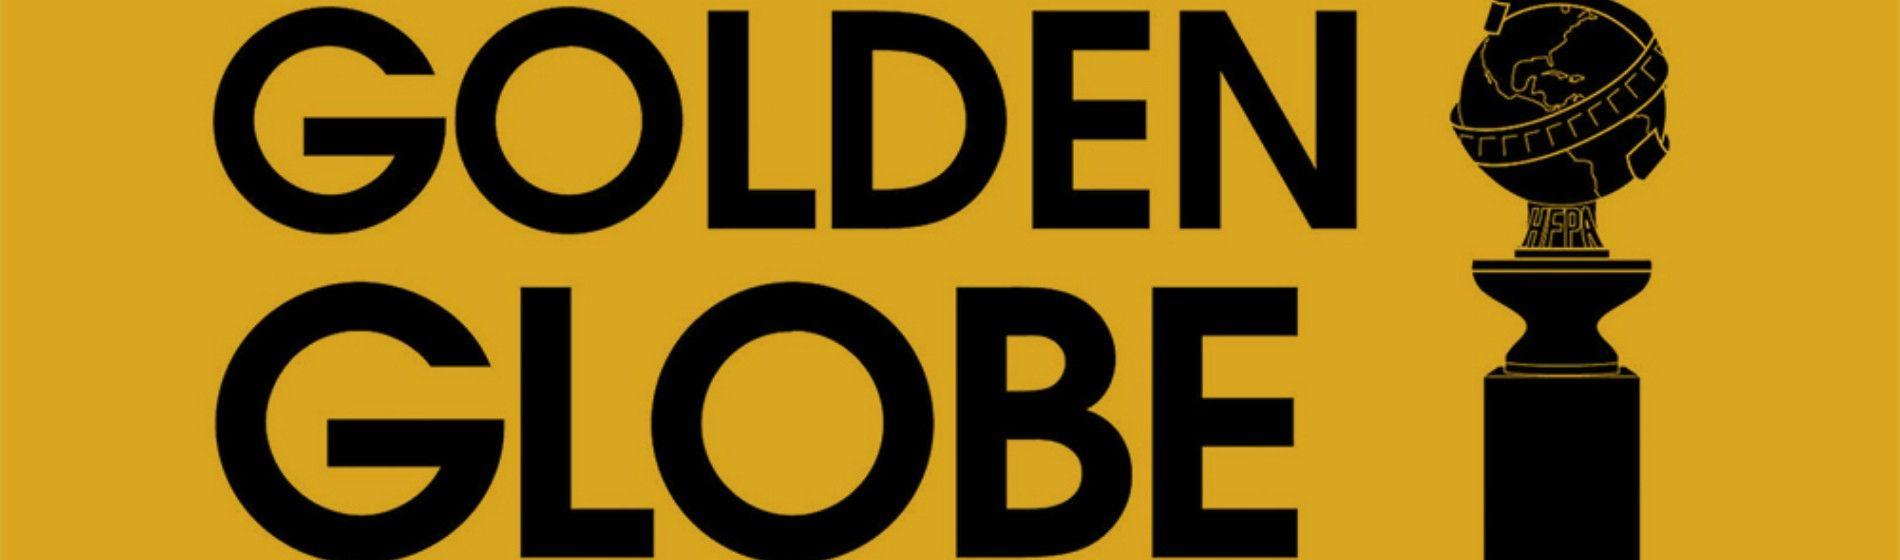 Golden Globes Logo - Golden Globes: Making Sense of the Night's Wacky Results